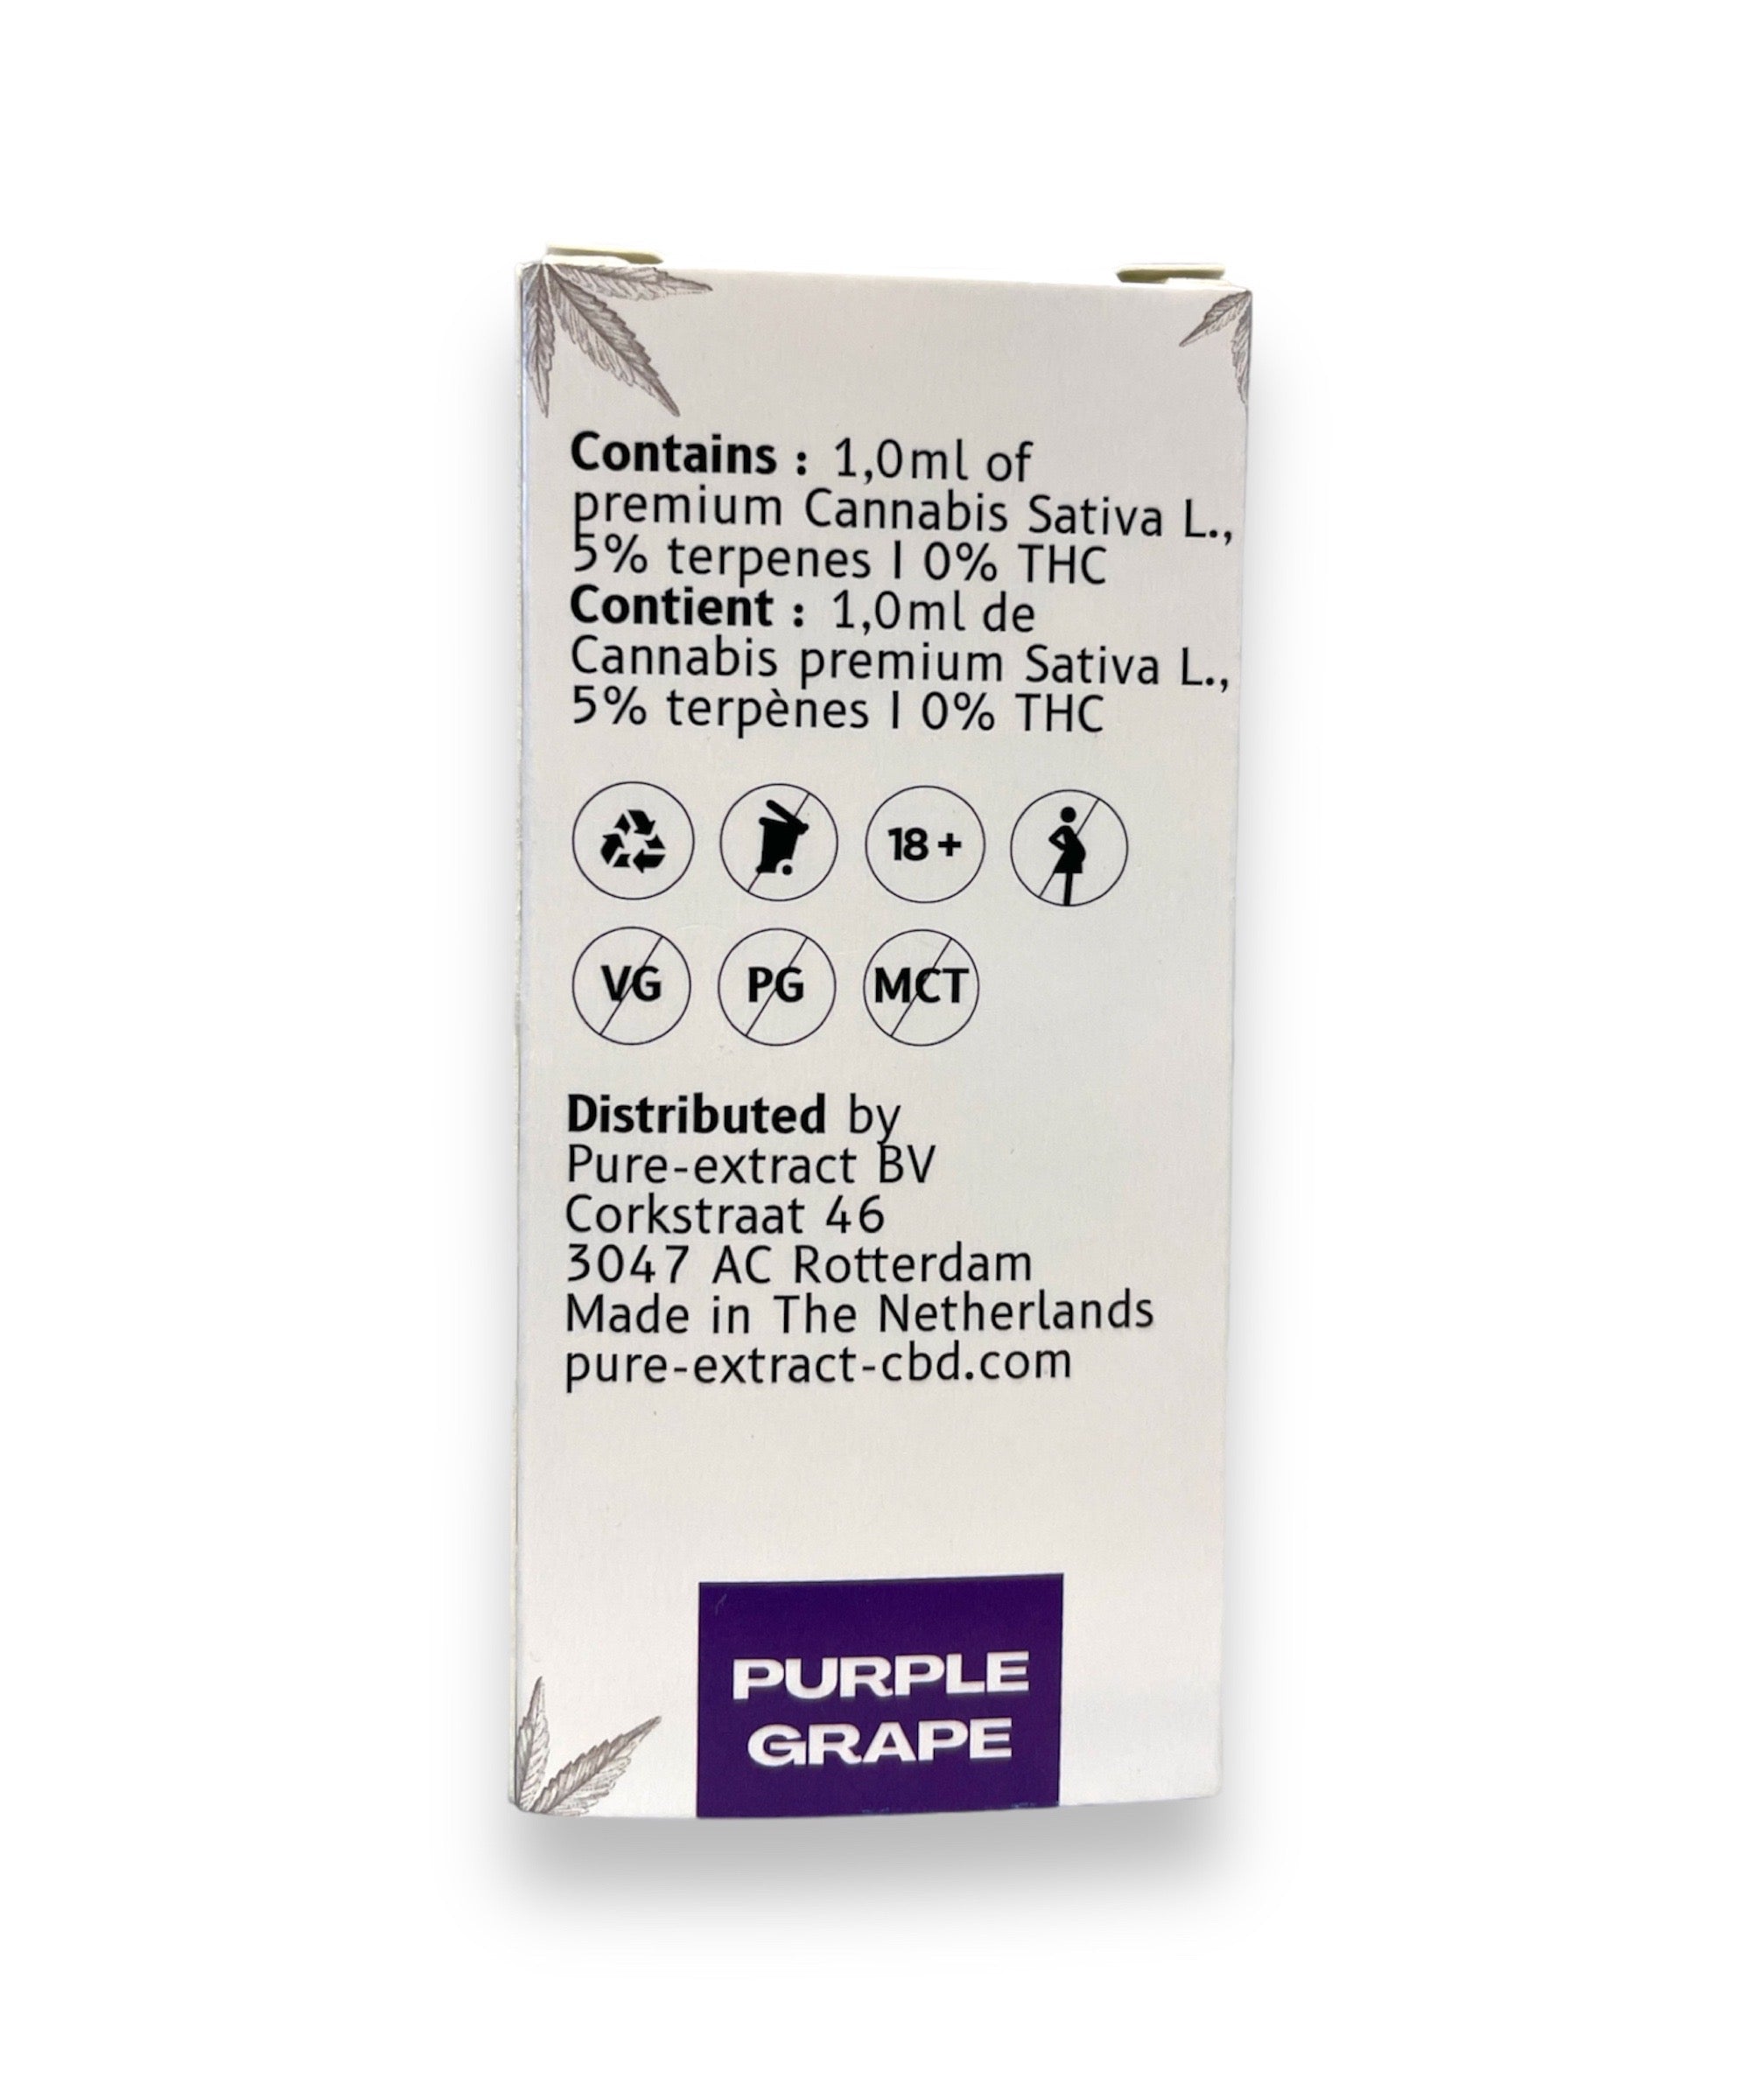 Pure Extract CBD Cartridge (Dab Pen) van H4CBD - Purple Grape - 95% H4CBD - 1ML - 600 trekjes